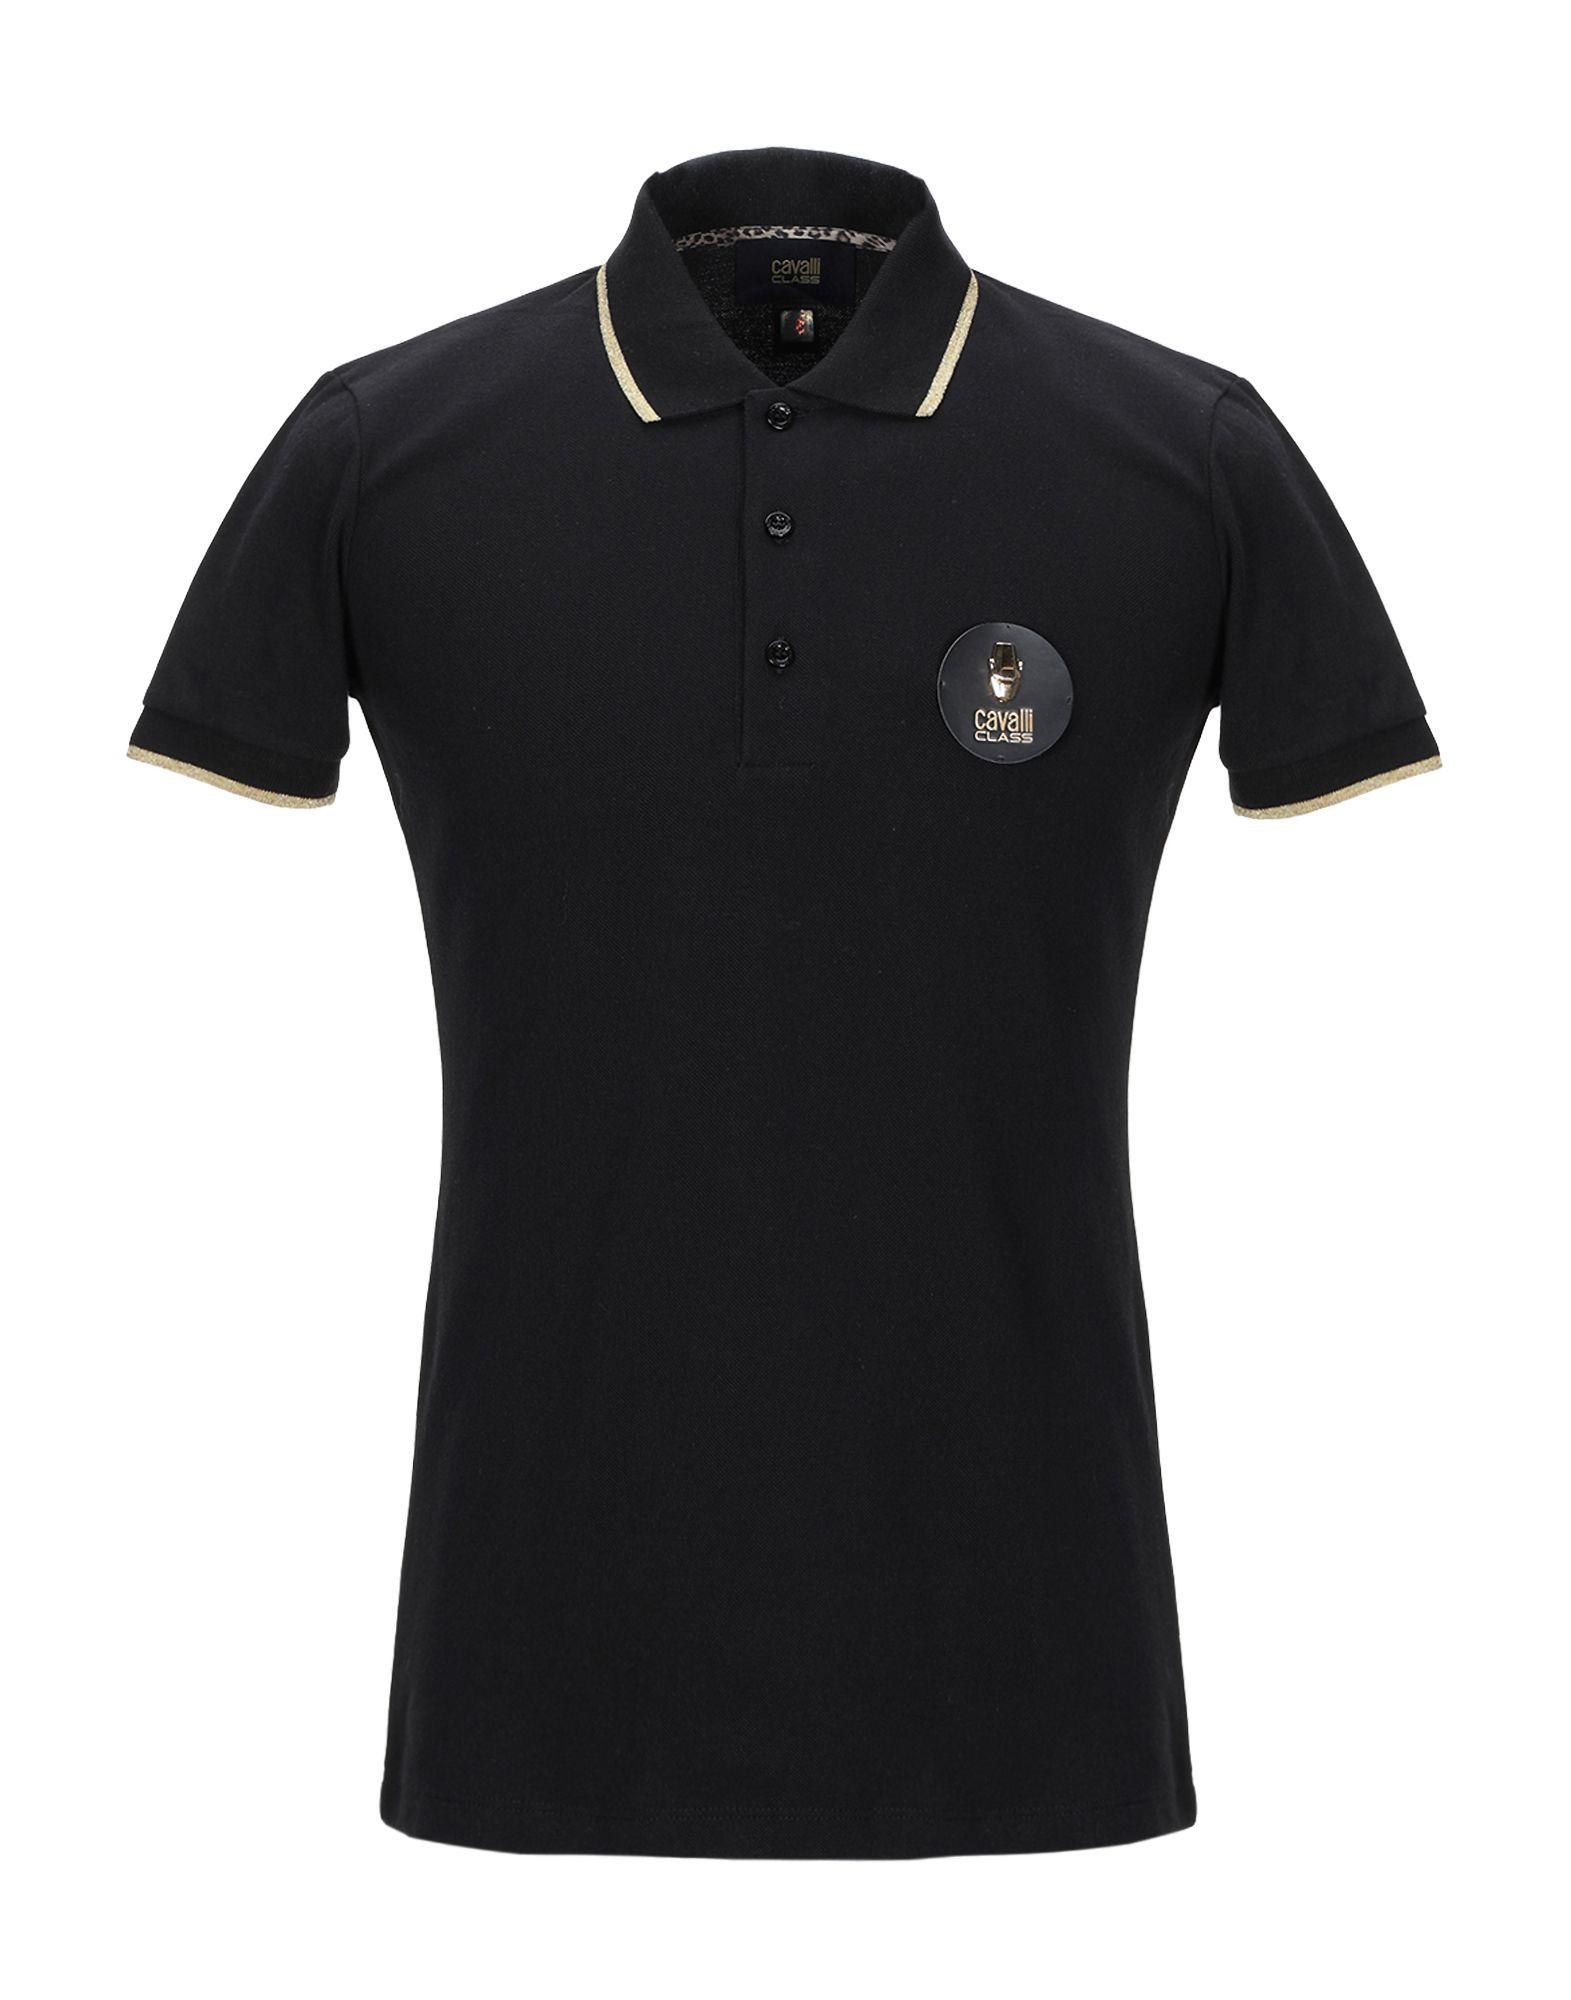 Class Roberto Cavalli Cotton Polo Shirt in Black for Men - Lyst